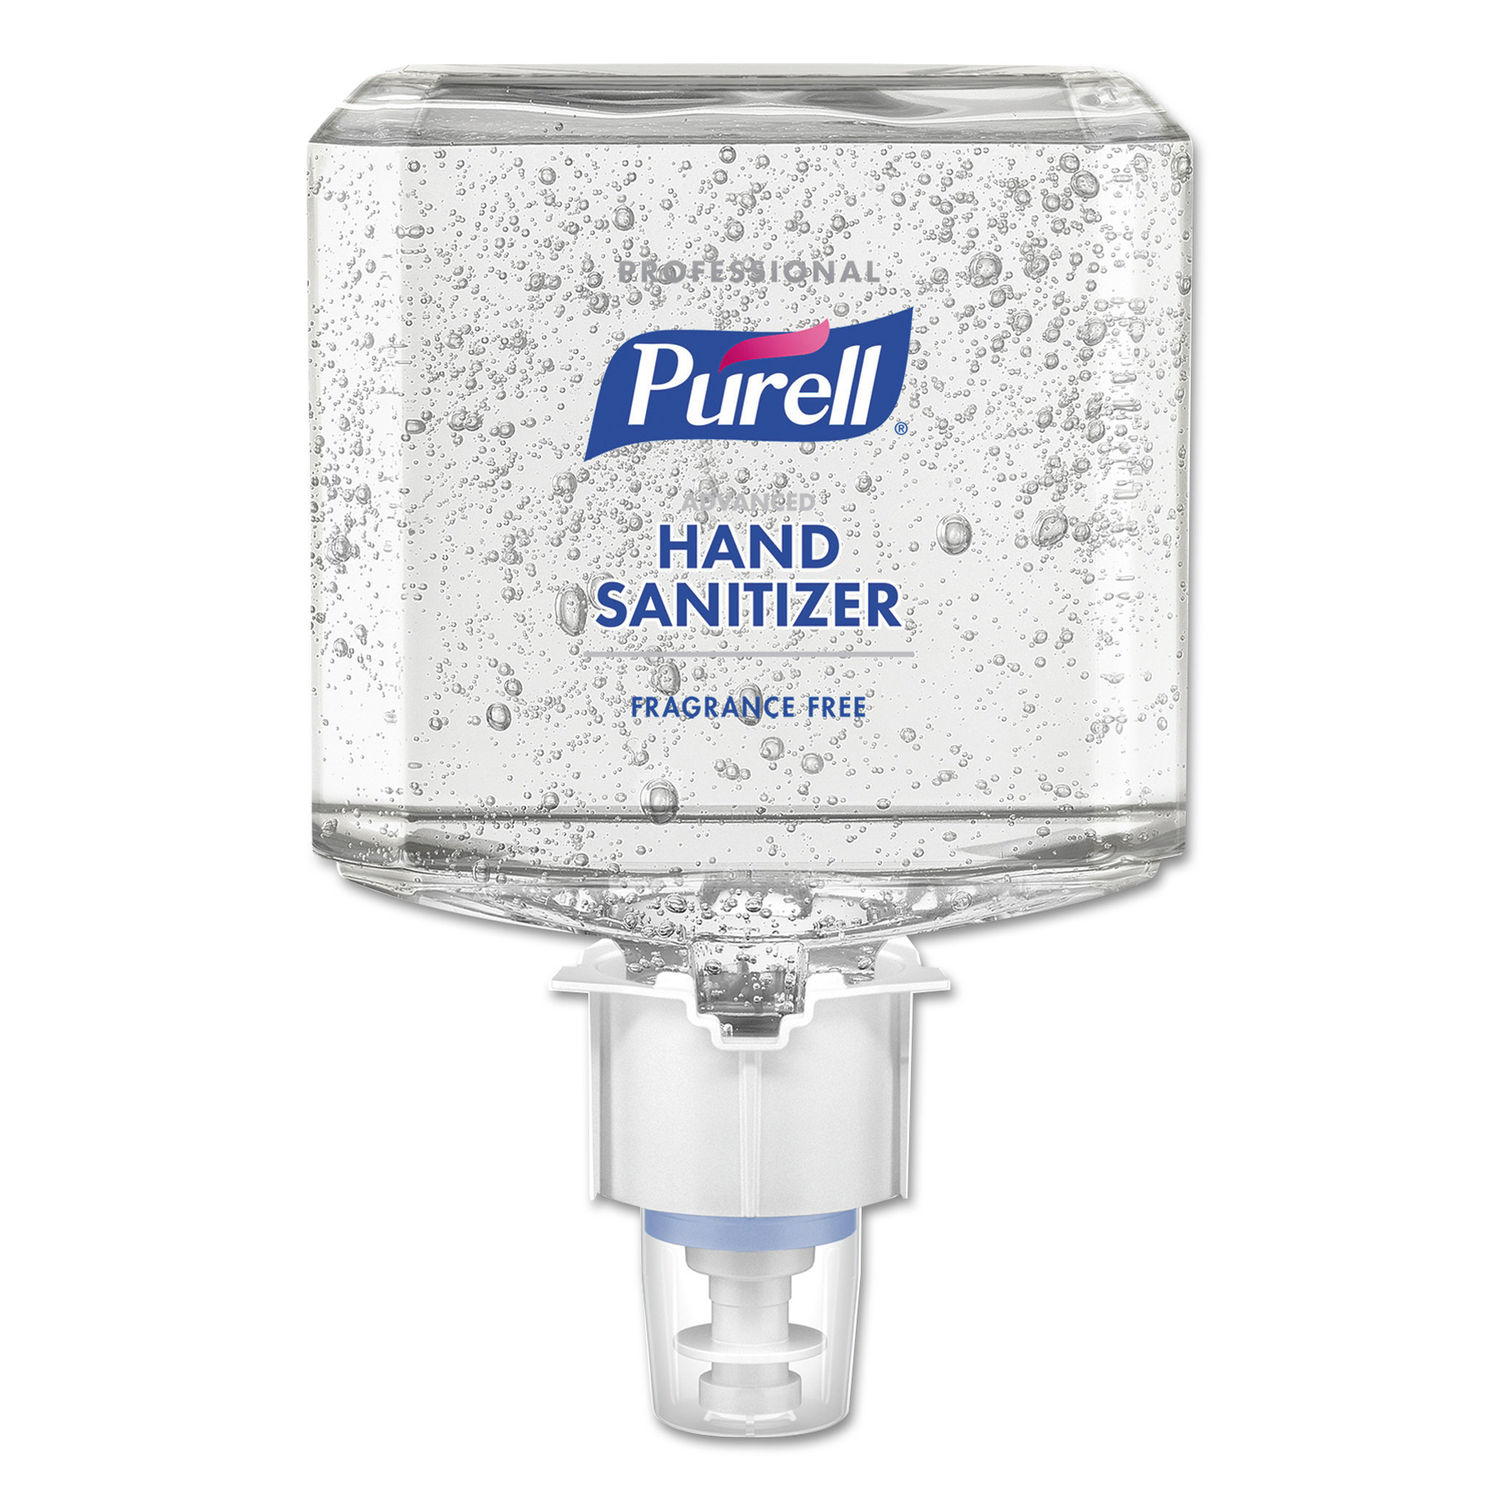 Professional Advanced Gel Hand Sanitizer Fragrance Free, For ES4 Dispenser, 2/Carton